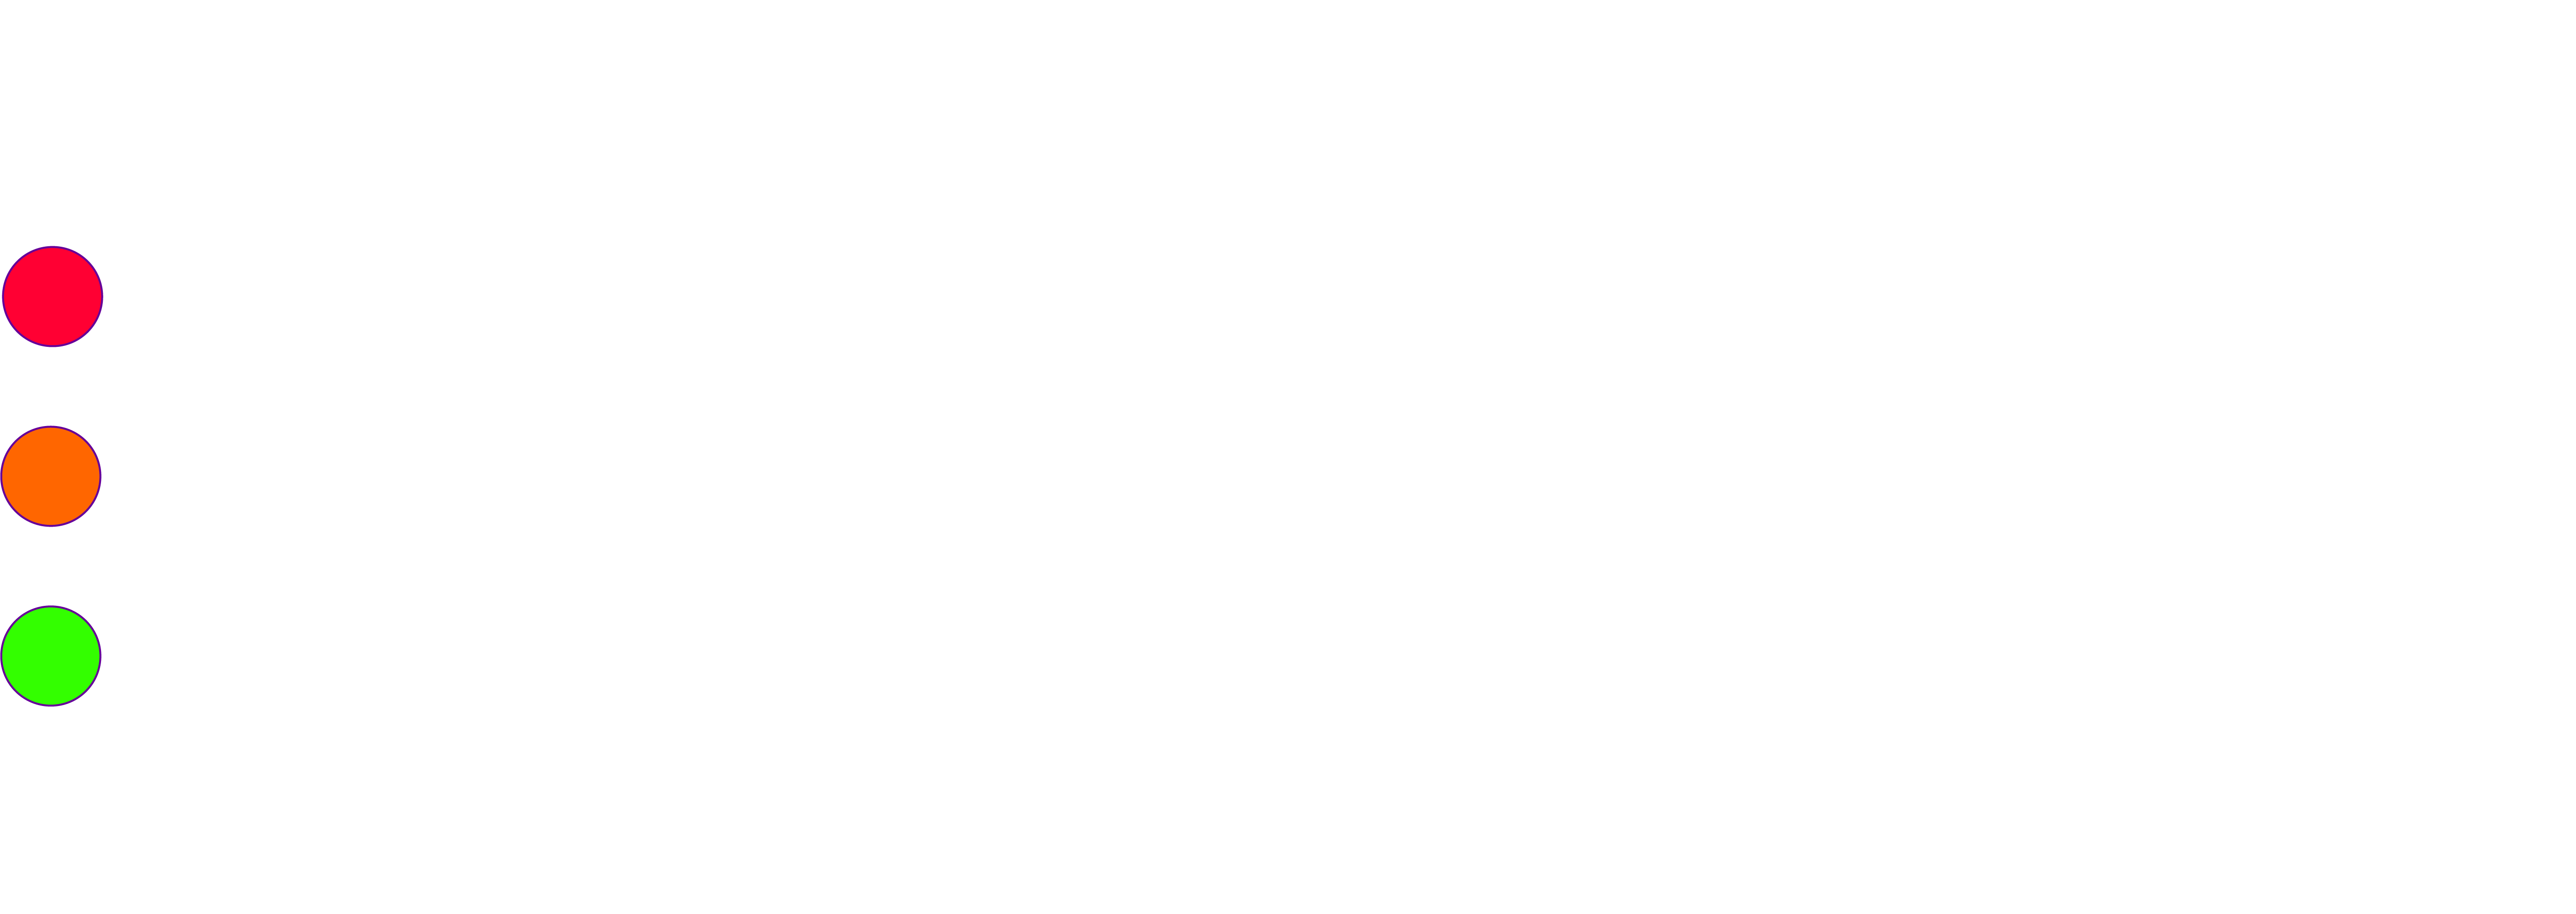 mpro5 logo white